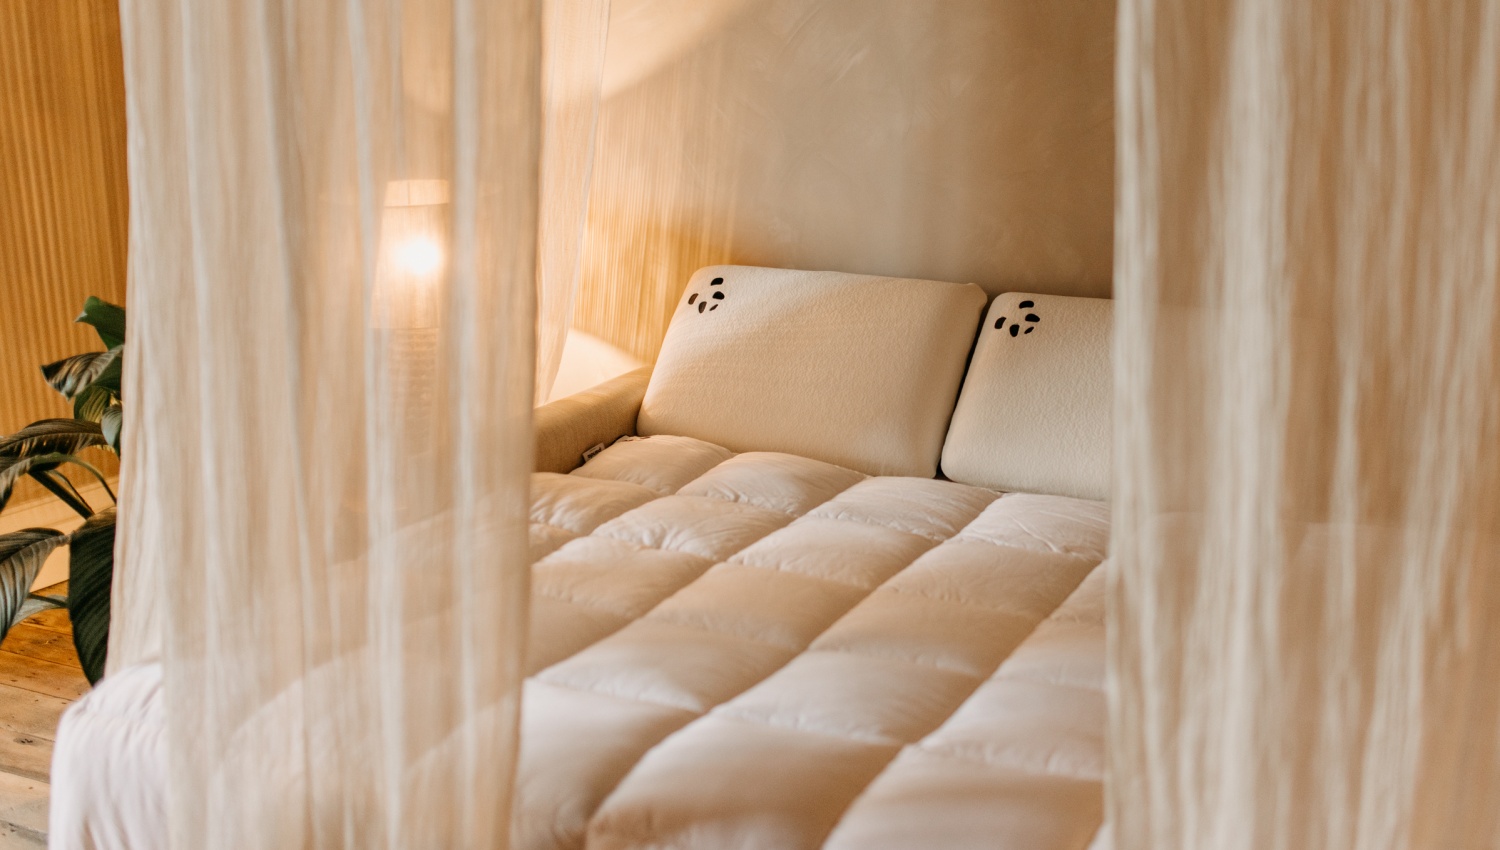 Panda Cloud Duvet on the bed